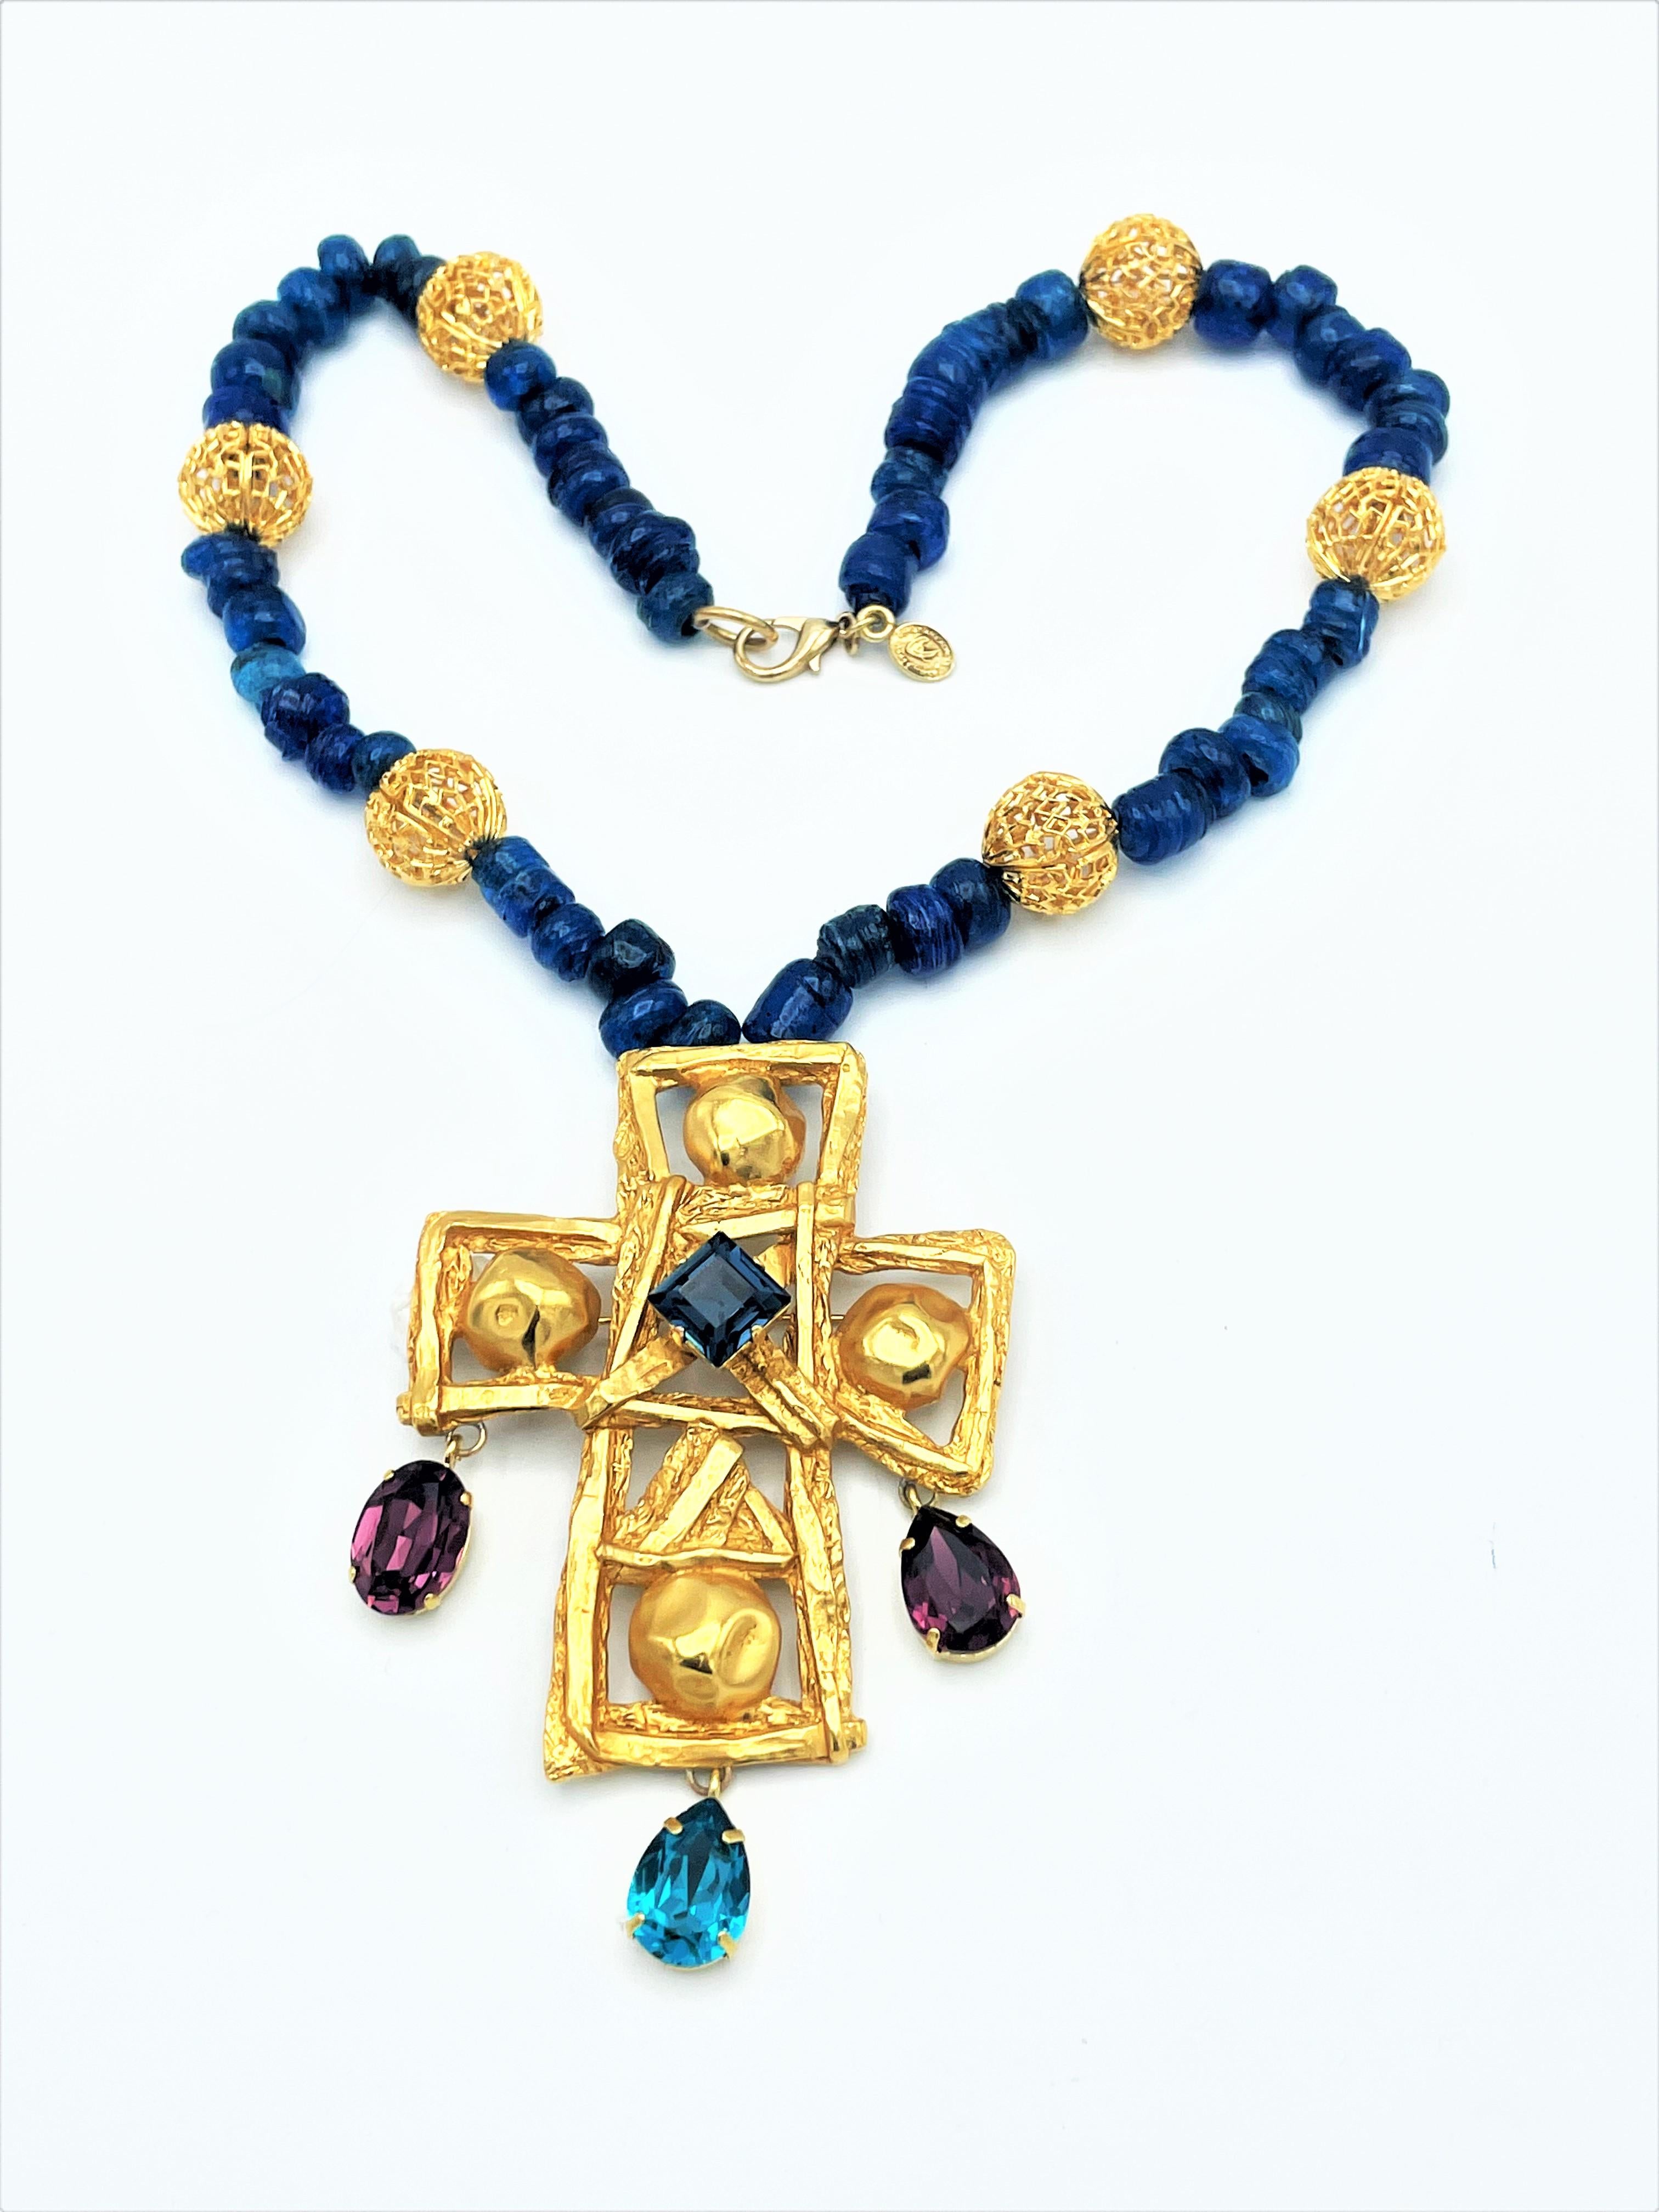 discount 70% Pink/Navy Blue Single Dayaday Set of rigid bracelets WOMEN FASHION Accessories Costume jewellery set Navy Blue 